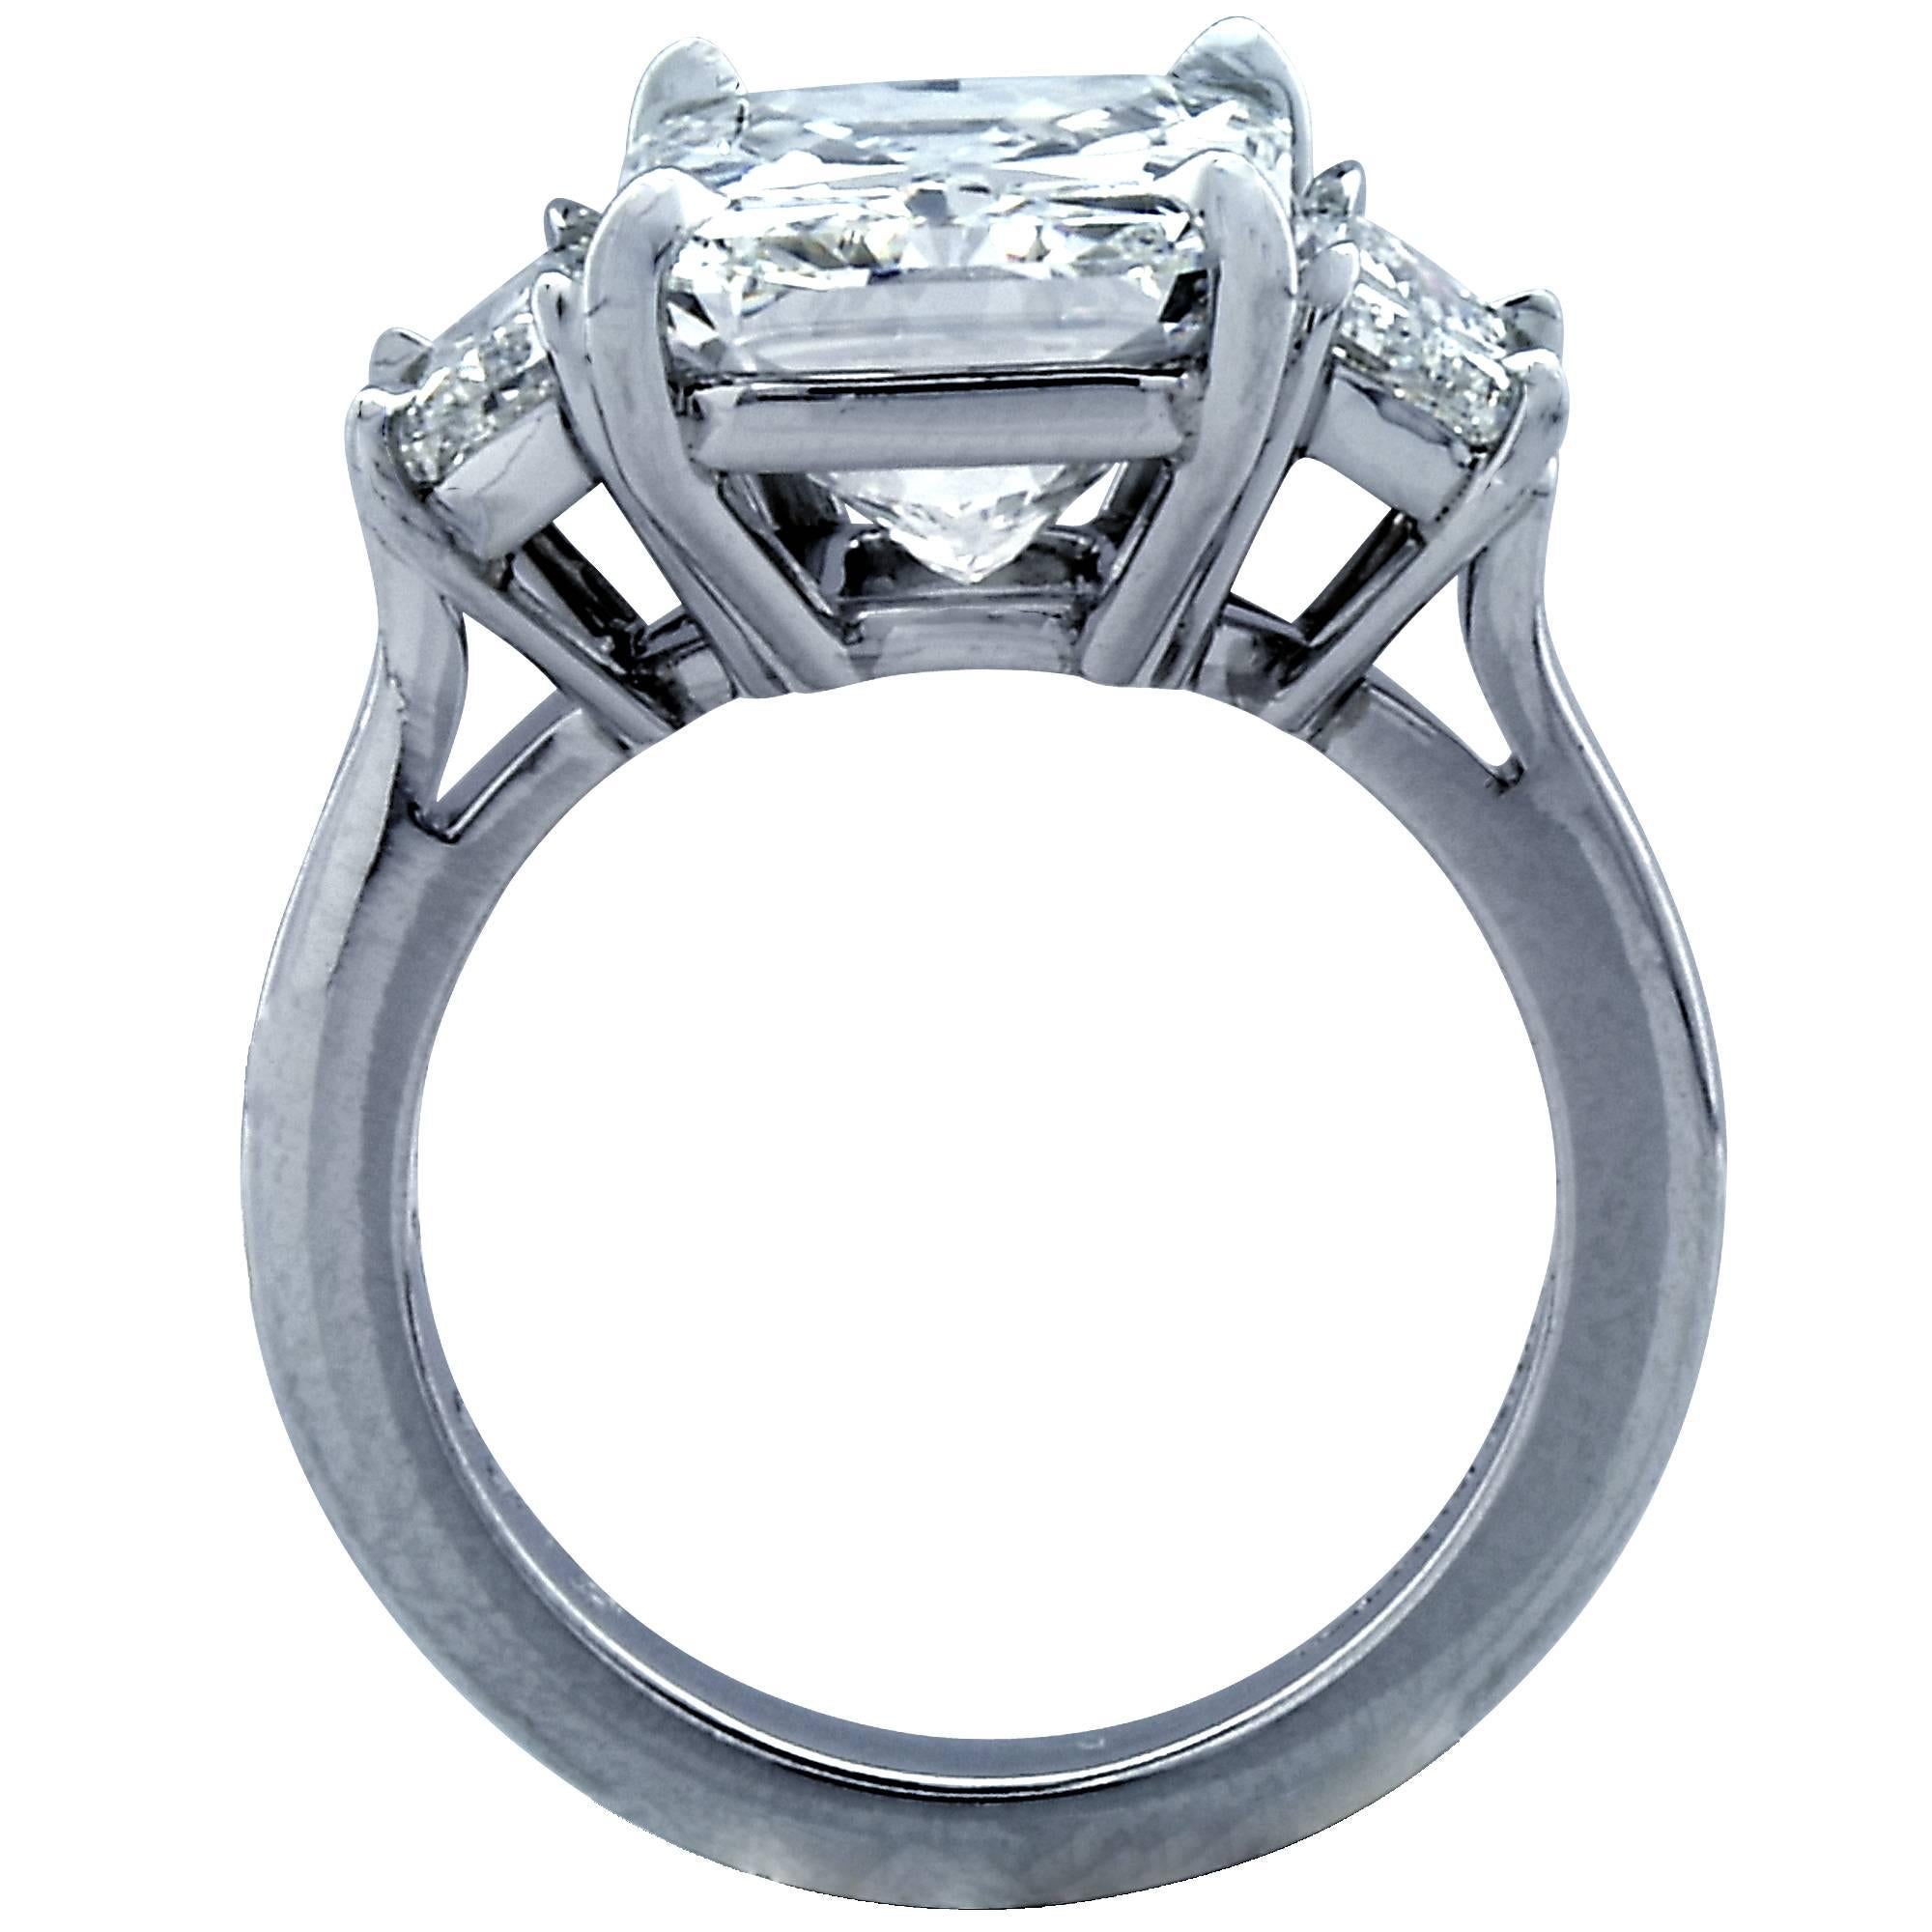 3 carat radiant cut diamond ring